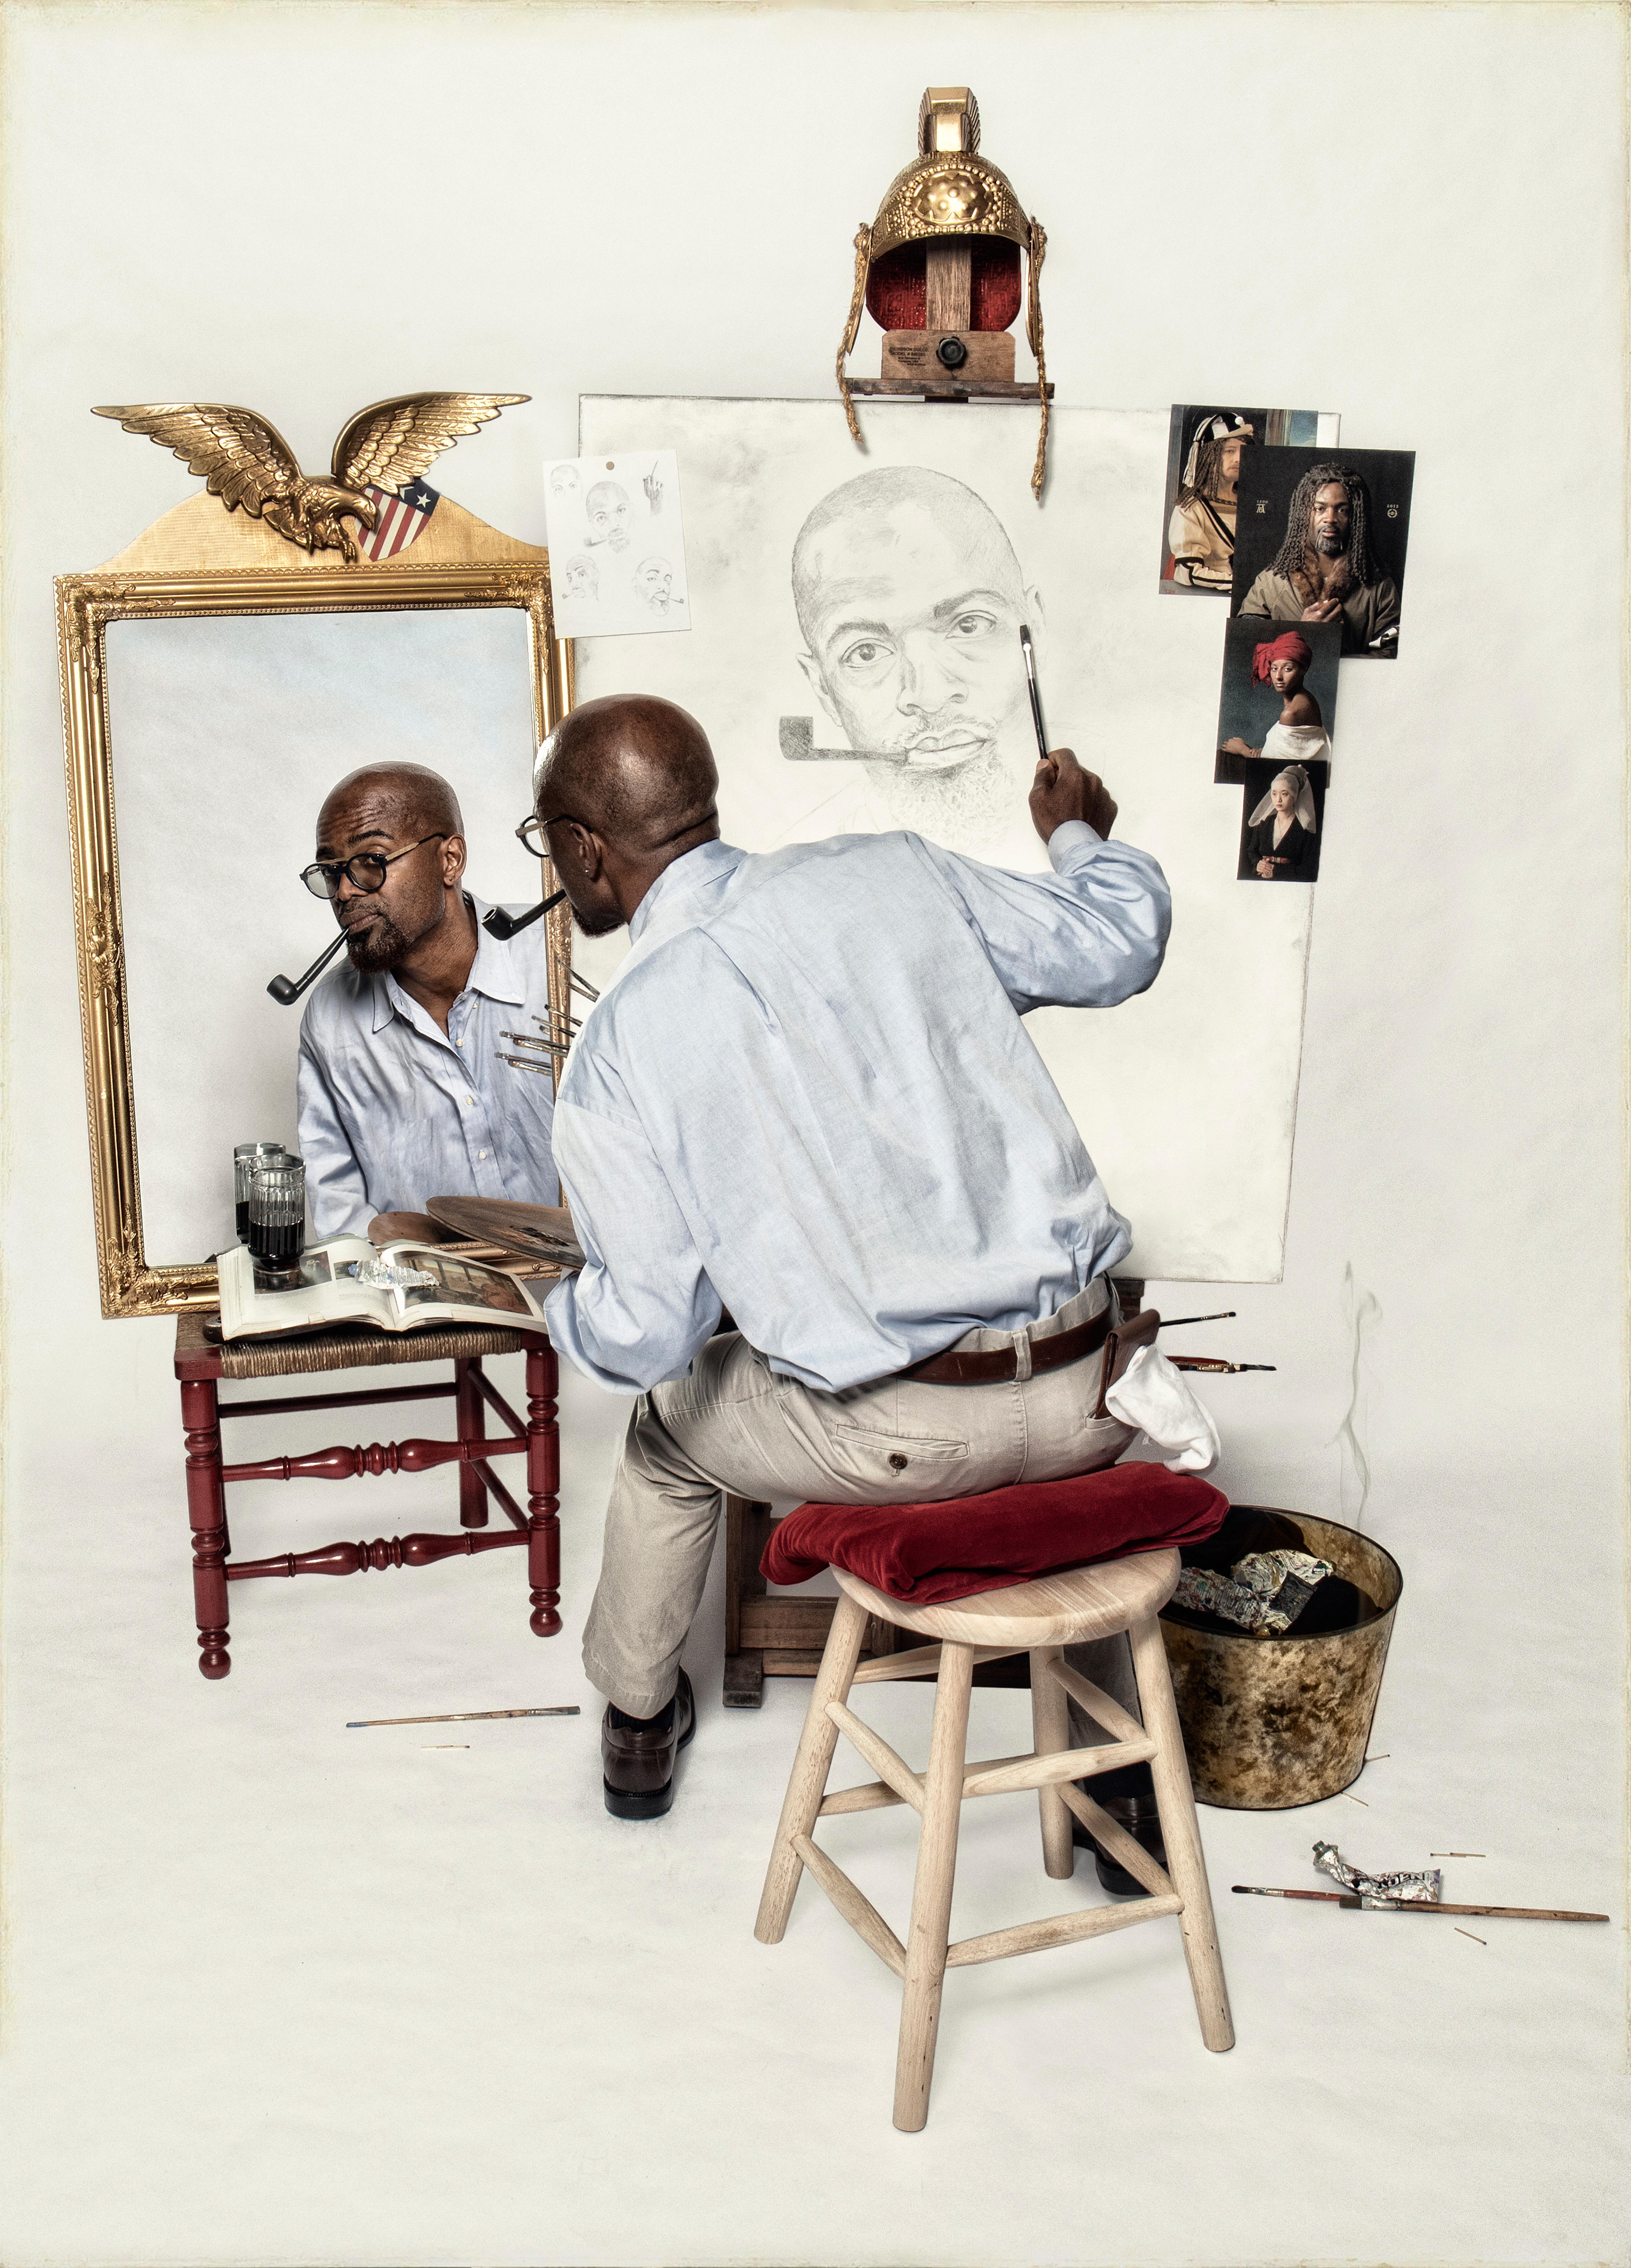 E2 - Kleinveld & Julien Figurative Photograph - Ode to Rockwell's Triple Self-Portrait